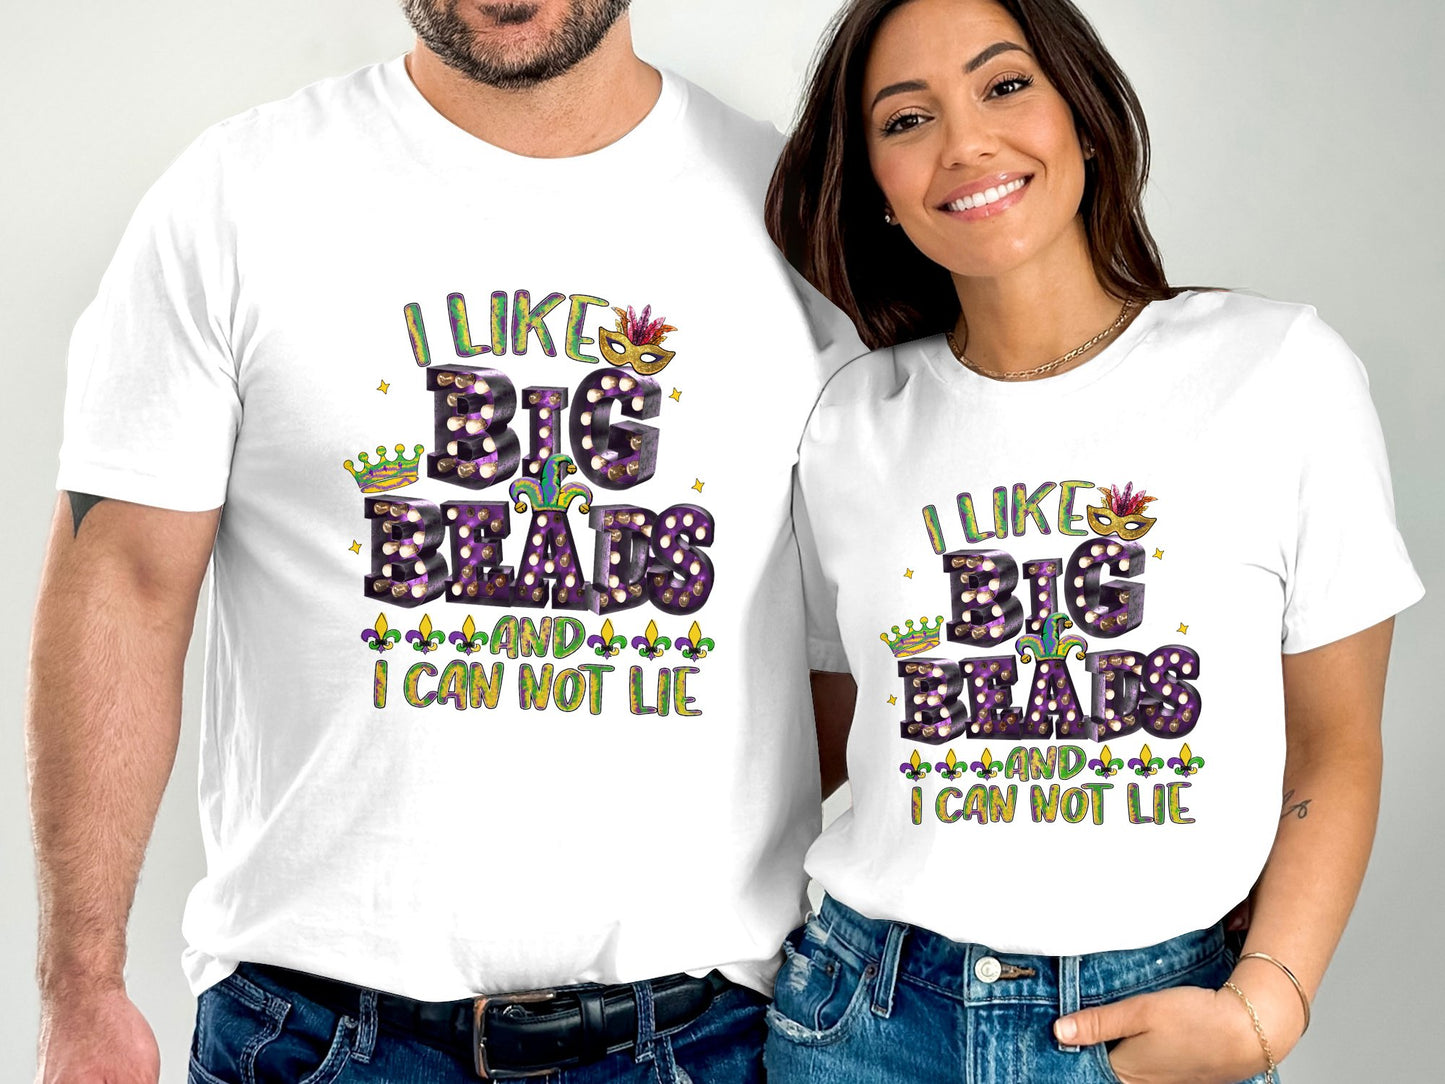 I like big beads and I can not lie, Mardi Gras T-shirt